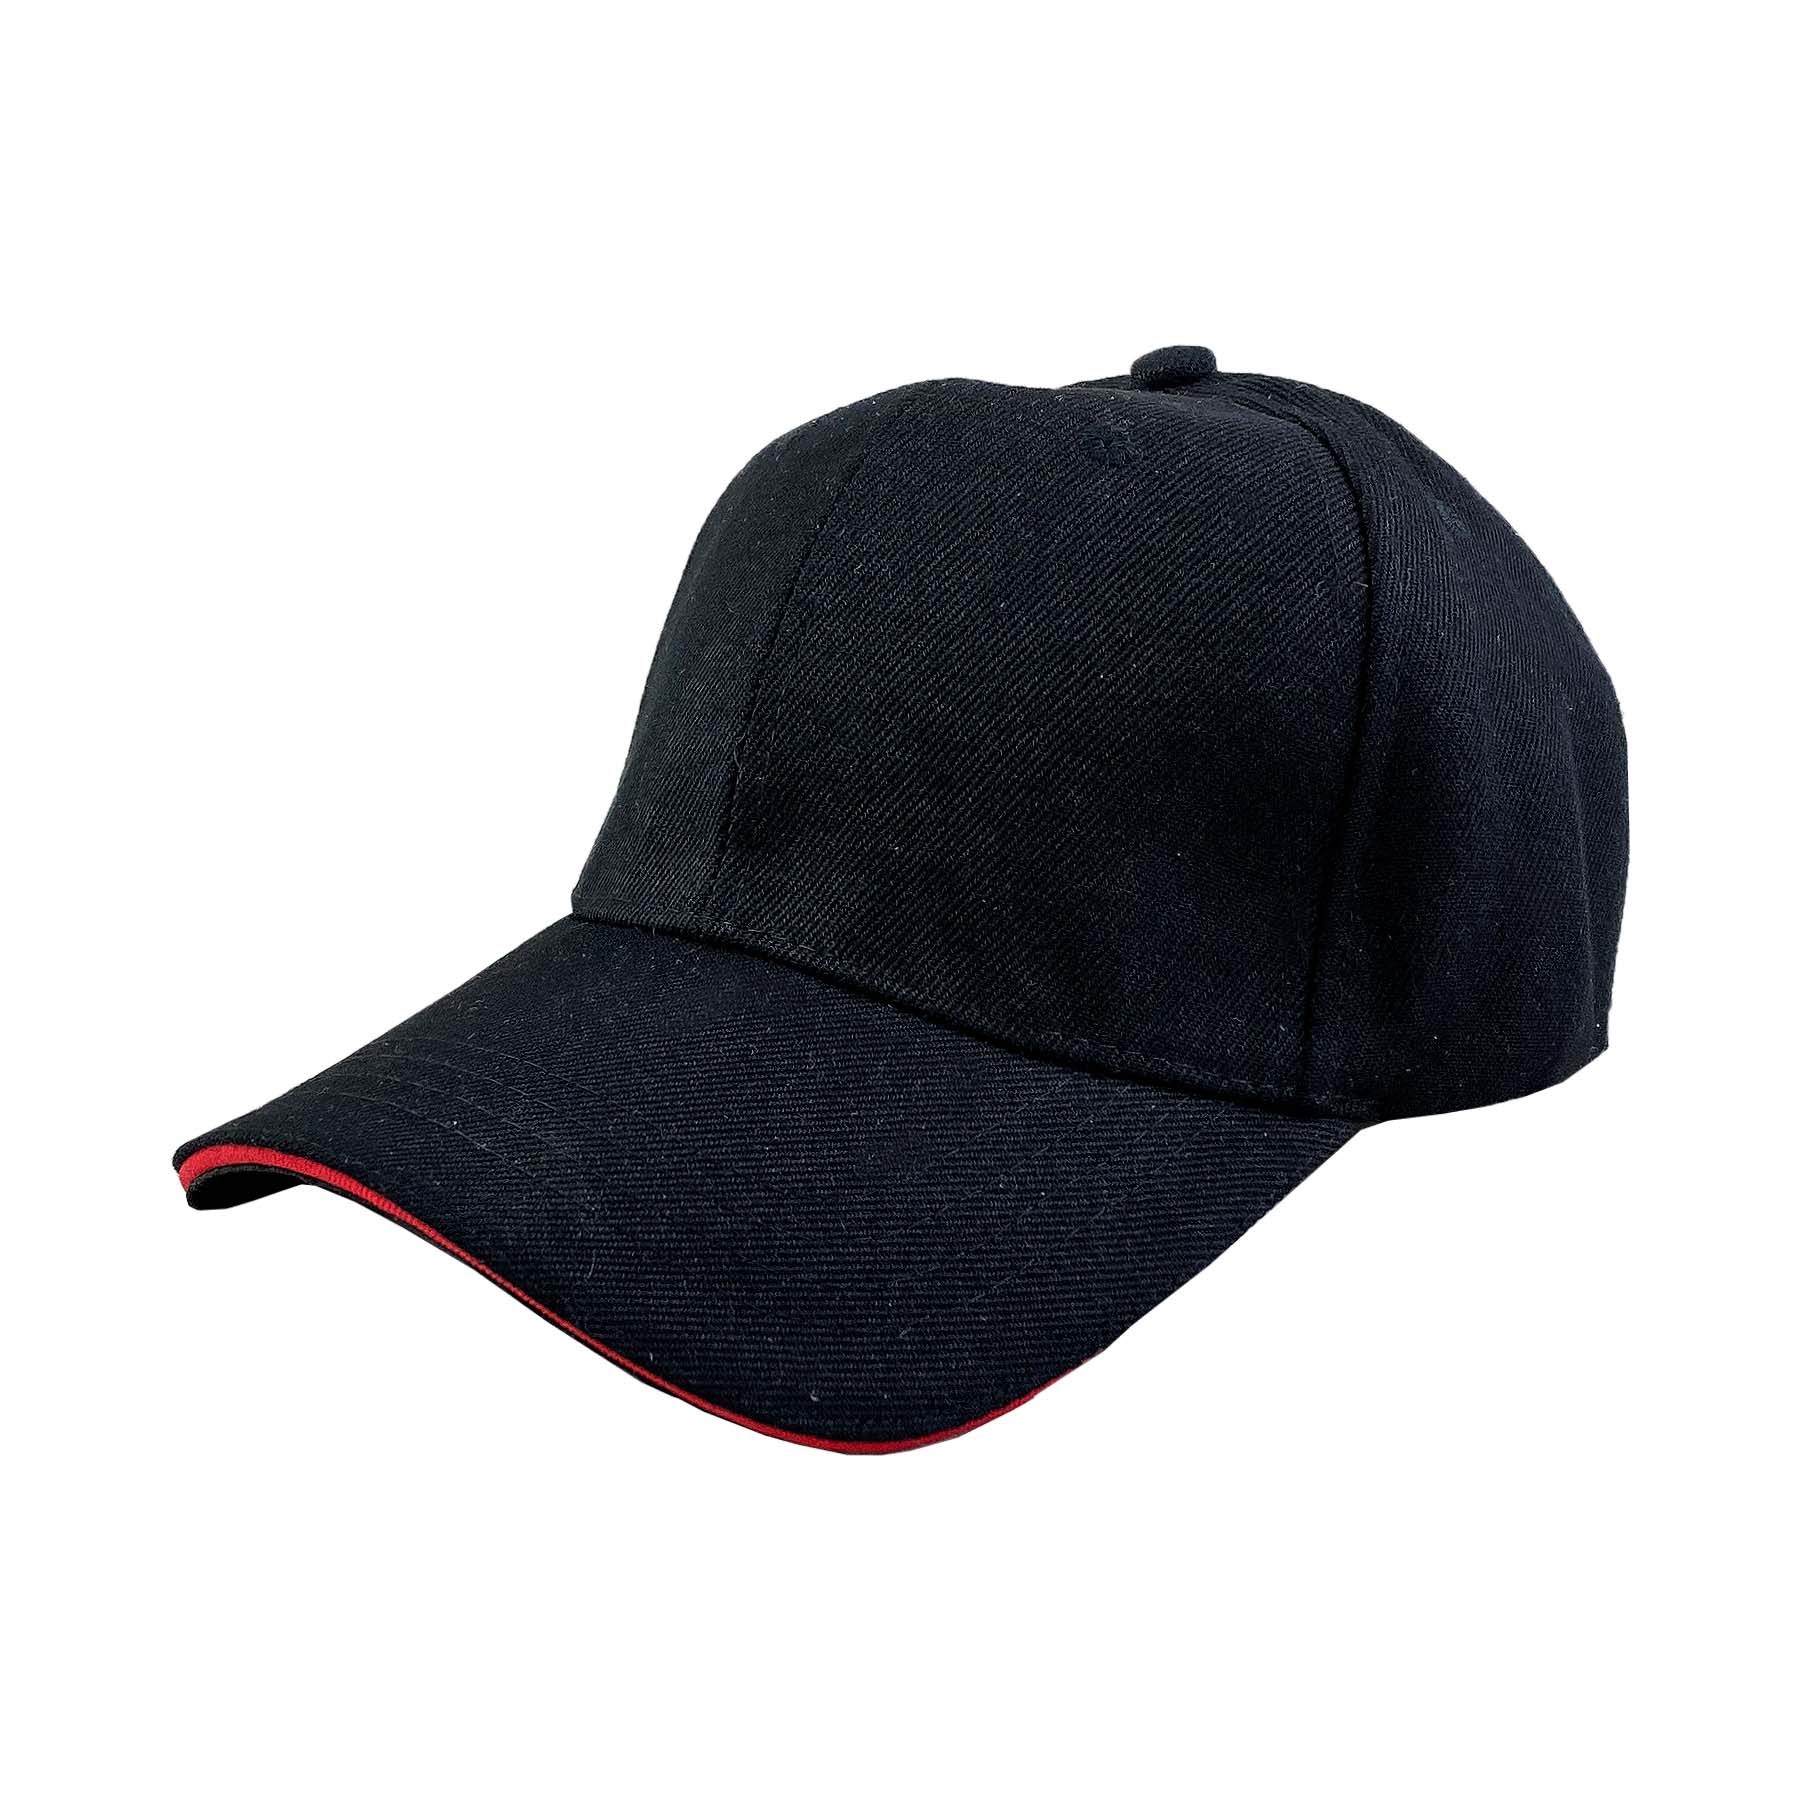 Shape28 - EMF Radiation Protection Hat with Uspf 50+ Shield, Wi-Fi Blocker & Reflective Safety Strip Black